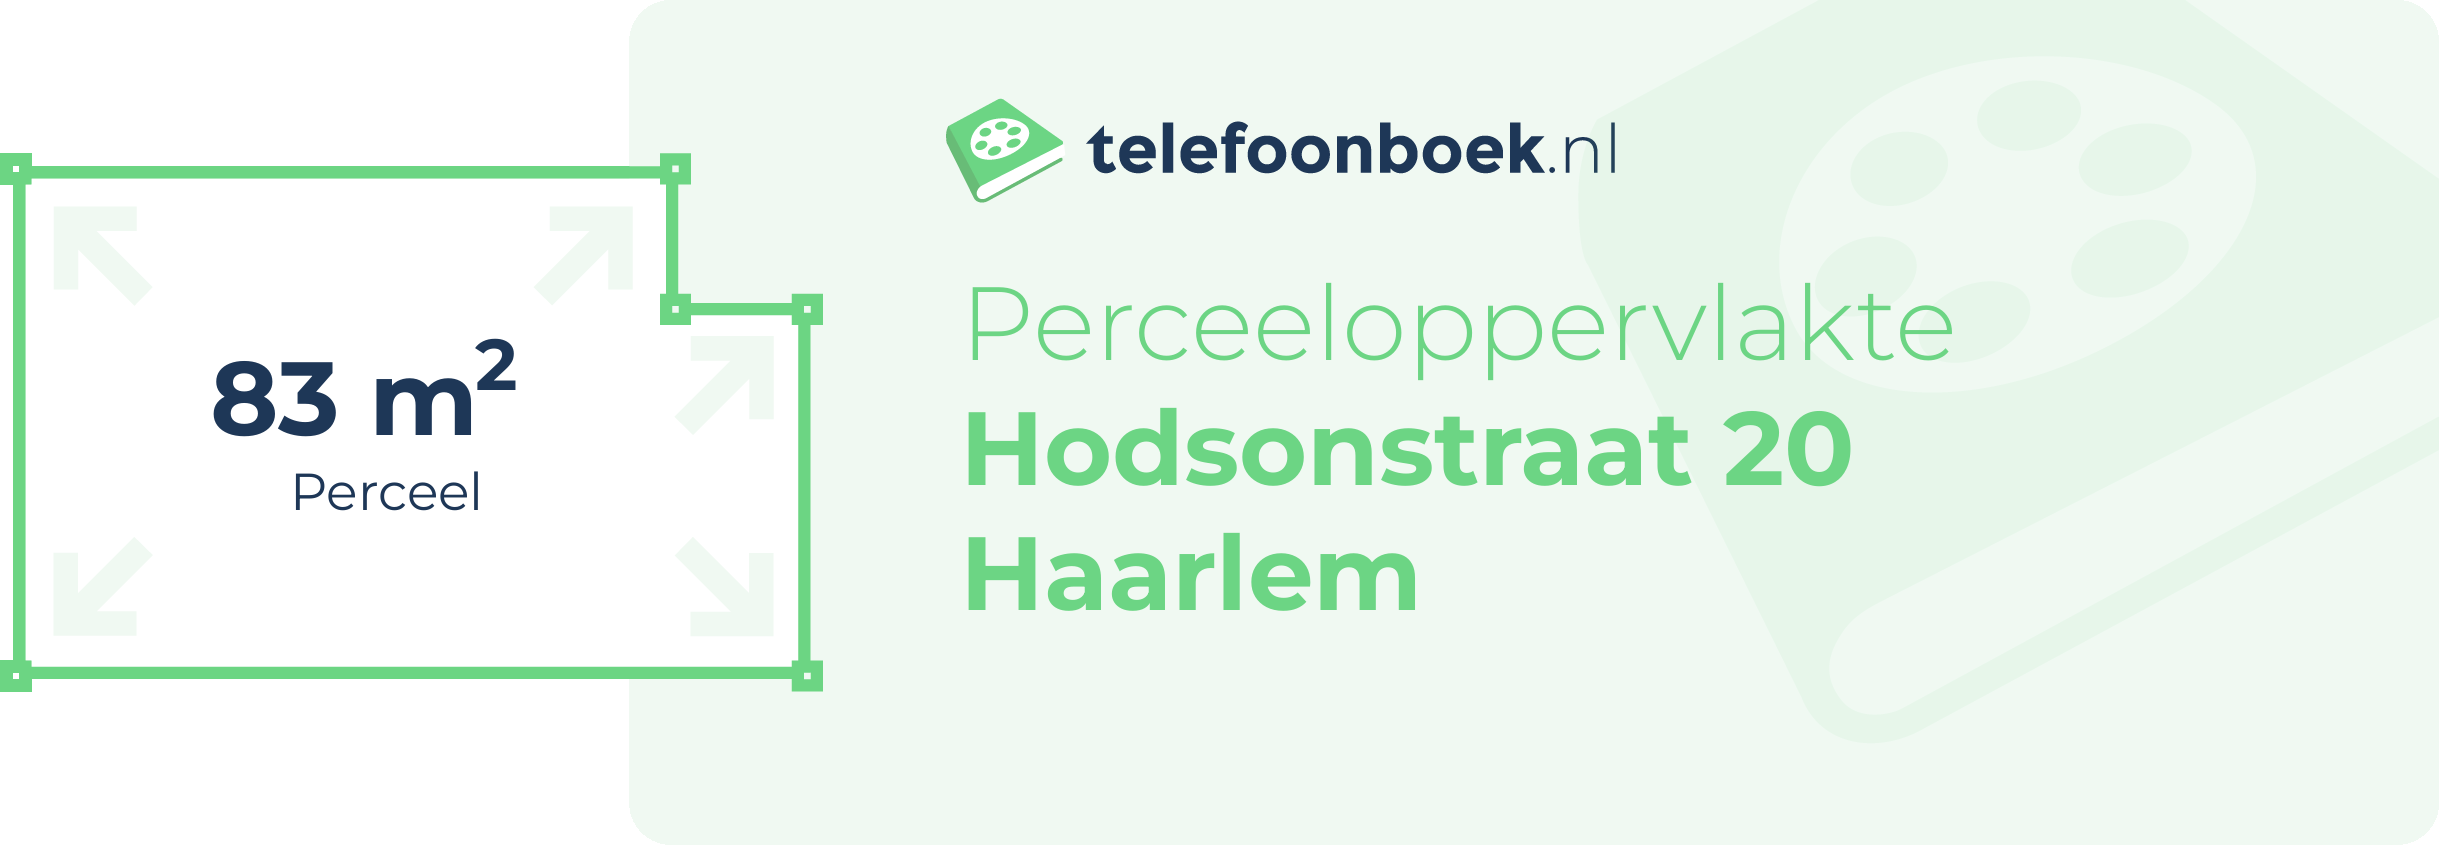 Perceeloppervlakte Hodsonstraat 20 Haarlem